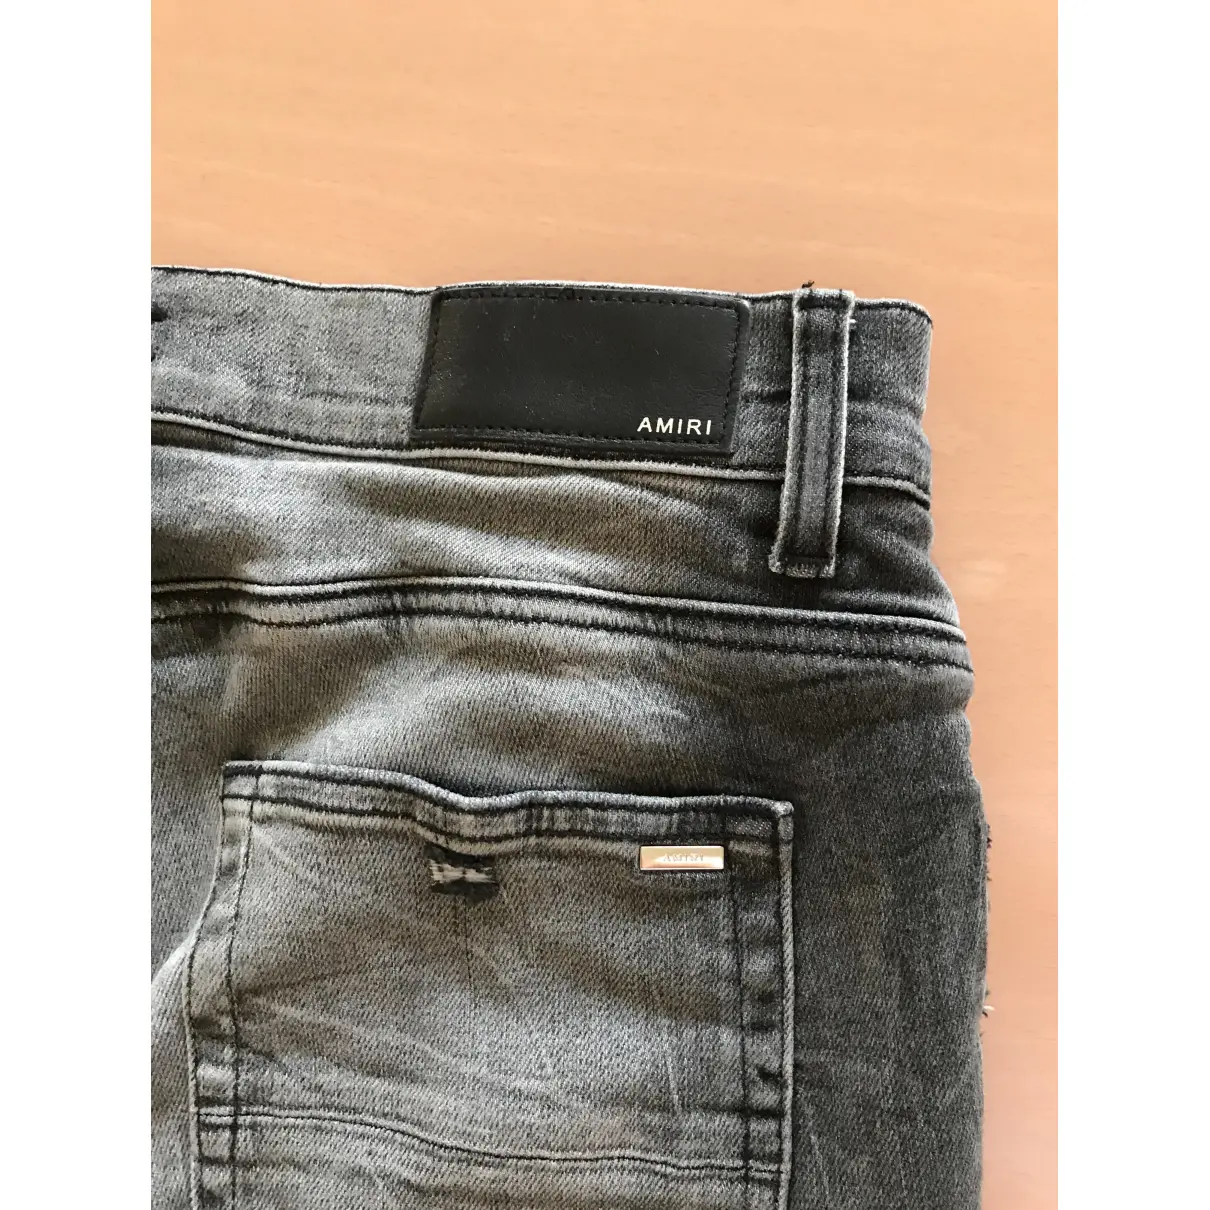 Buy Amiri Grey Cotton Jeans online